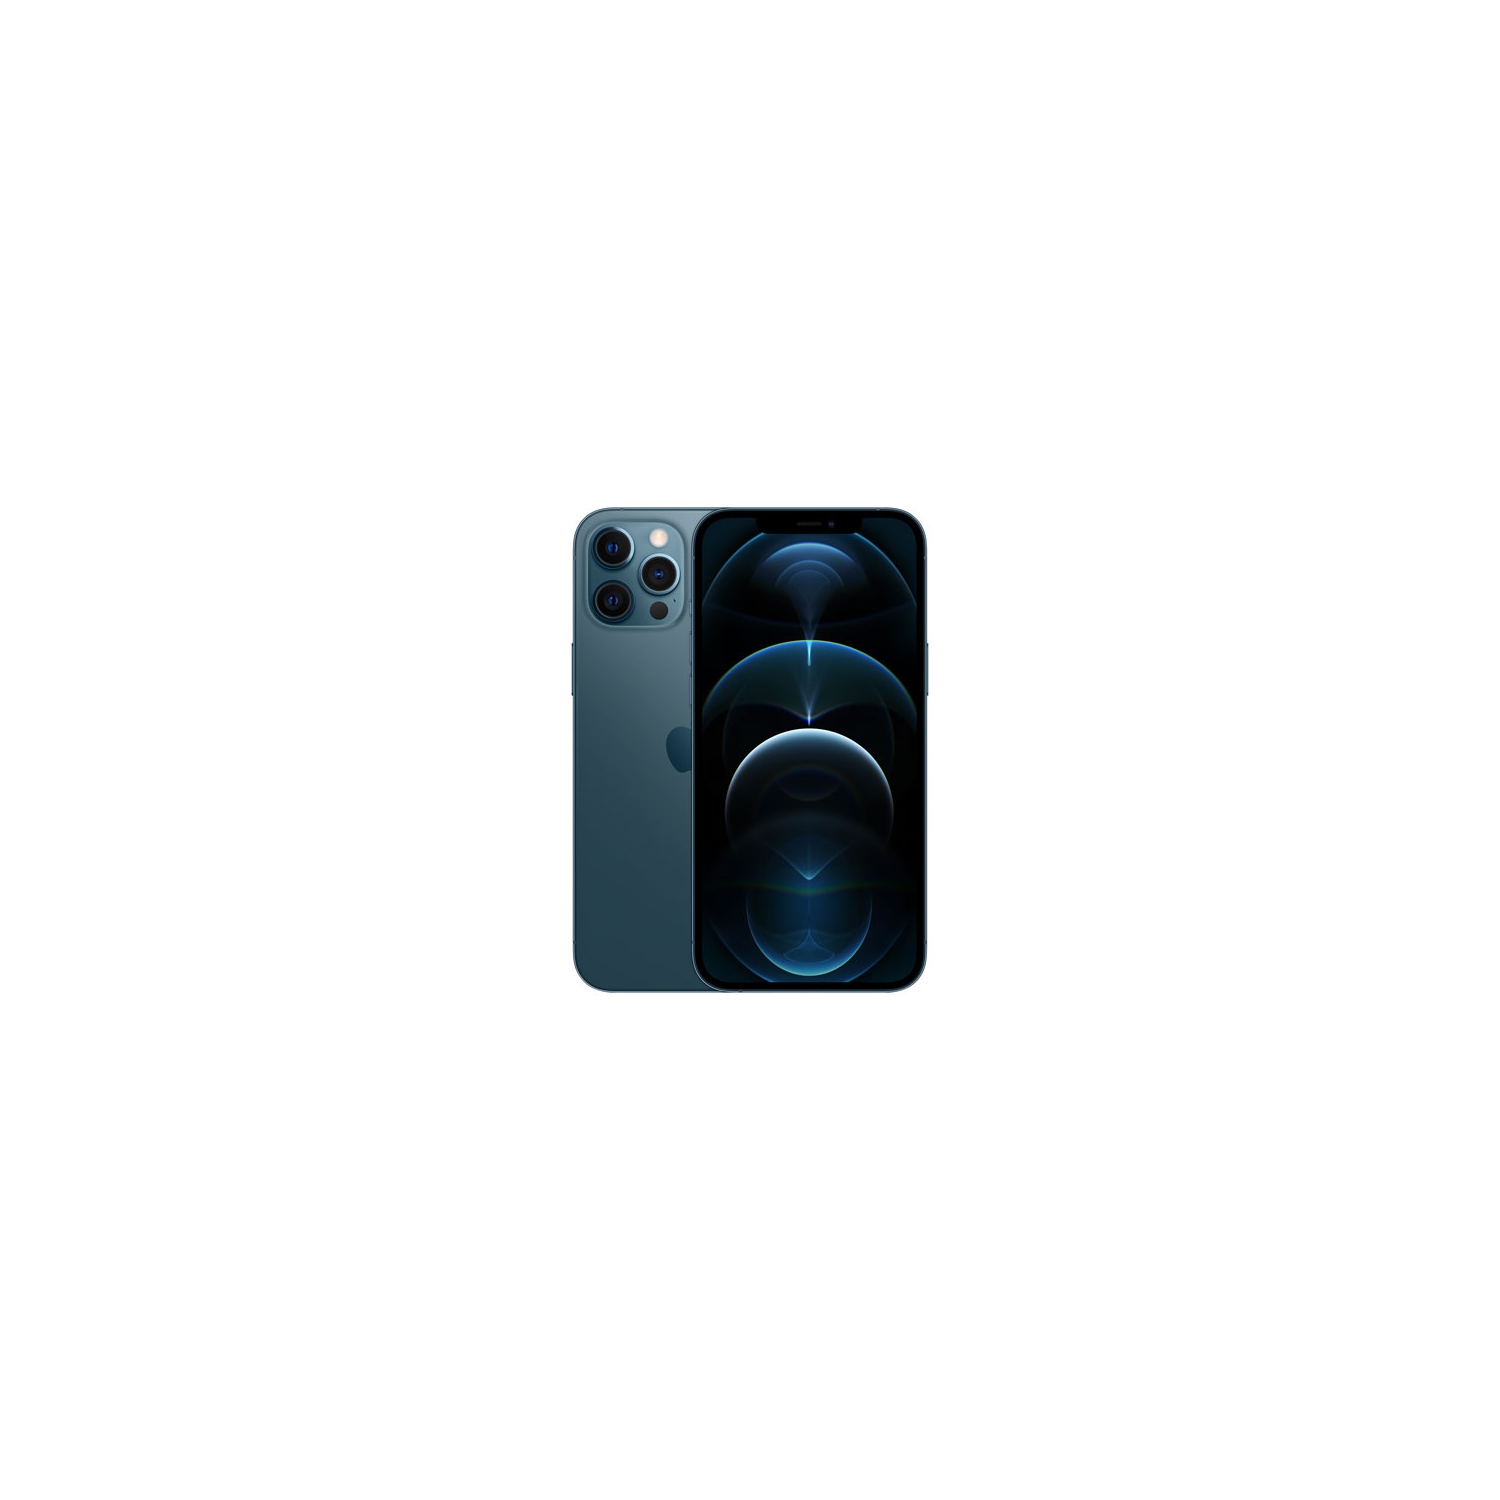 Refurbished (Fair) - Apple iPhone 12 Pro Max 128GB - Pacific Blue - Unlocked